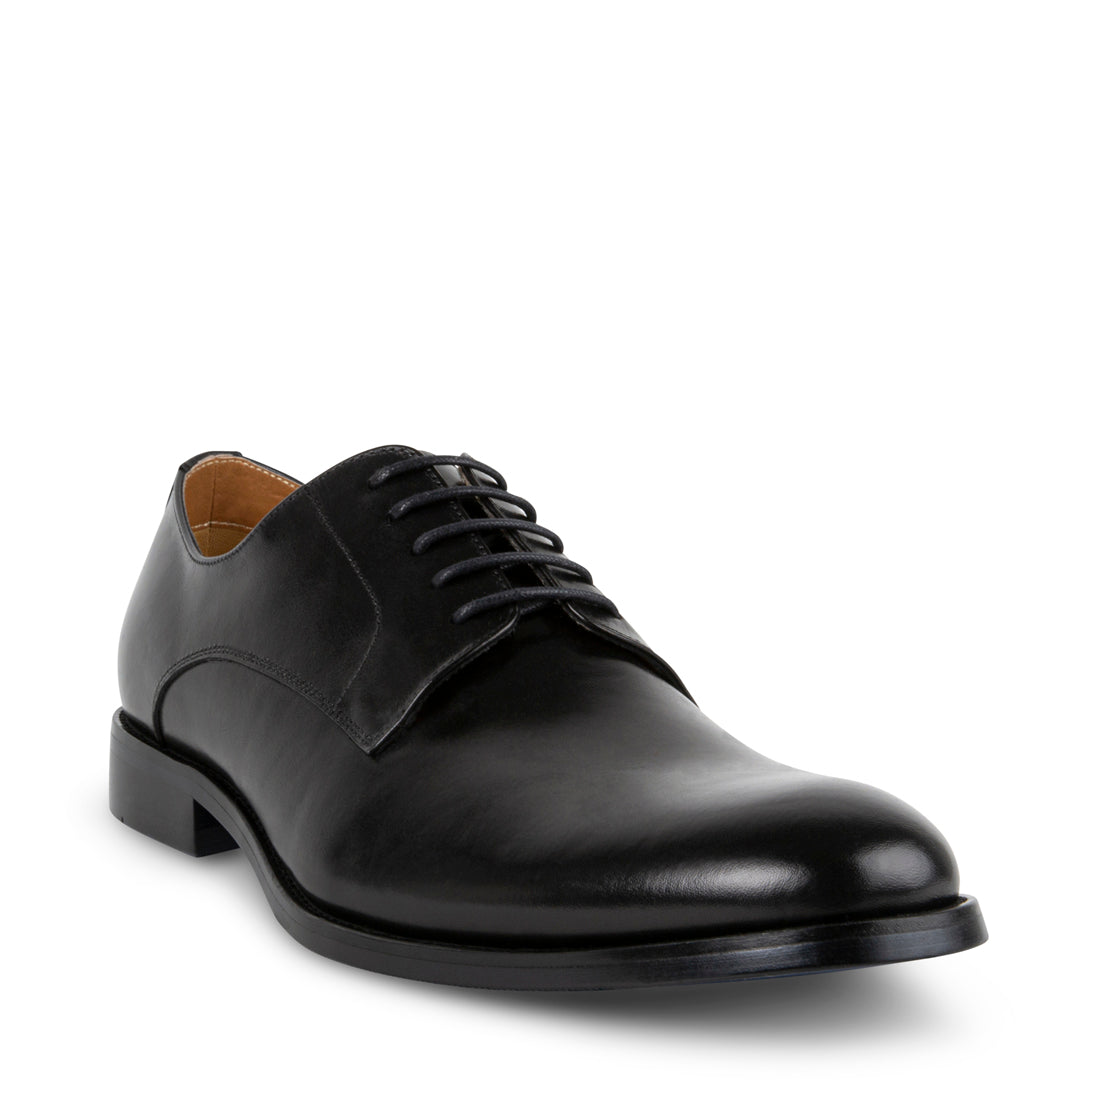 DAEDRIC Black Leather Men's Dress Shoes | Men's Designer Dress Shoes ...